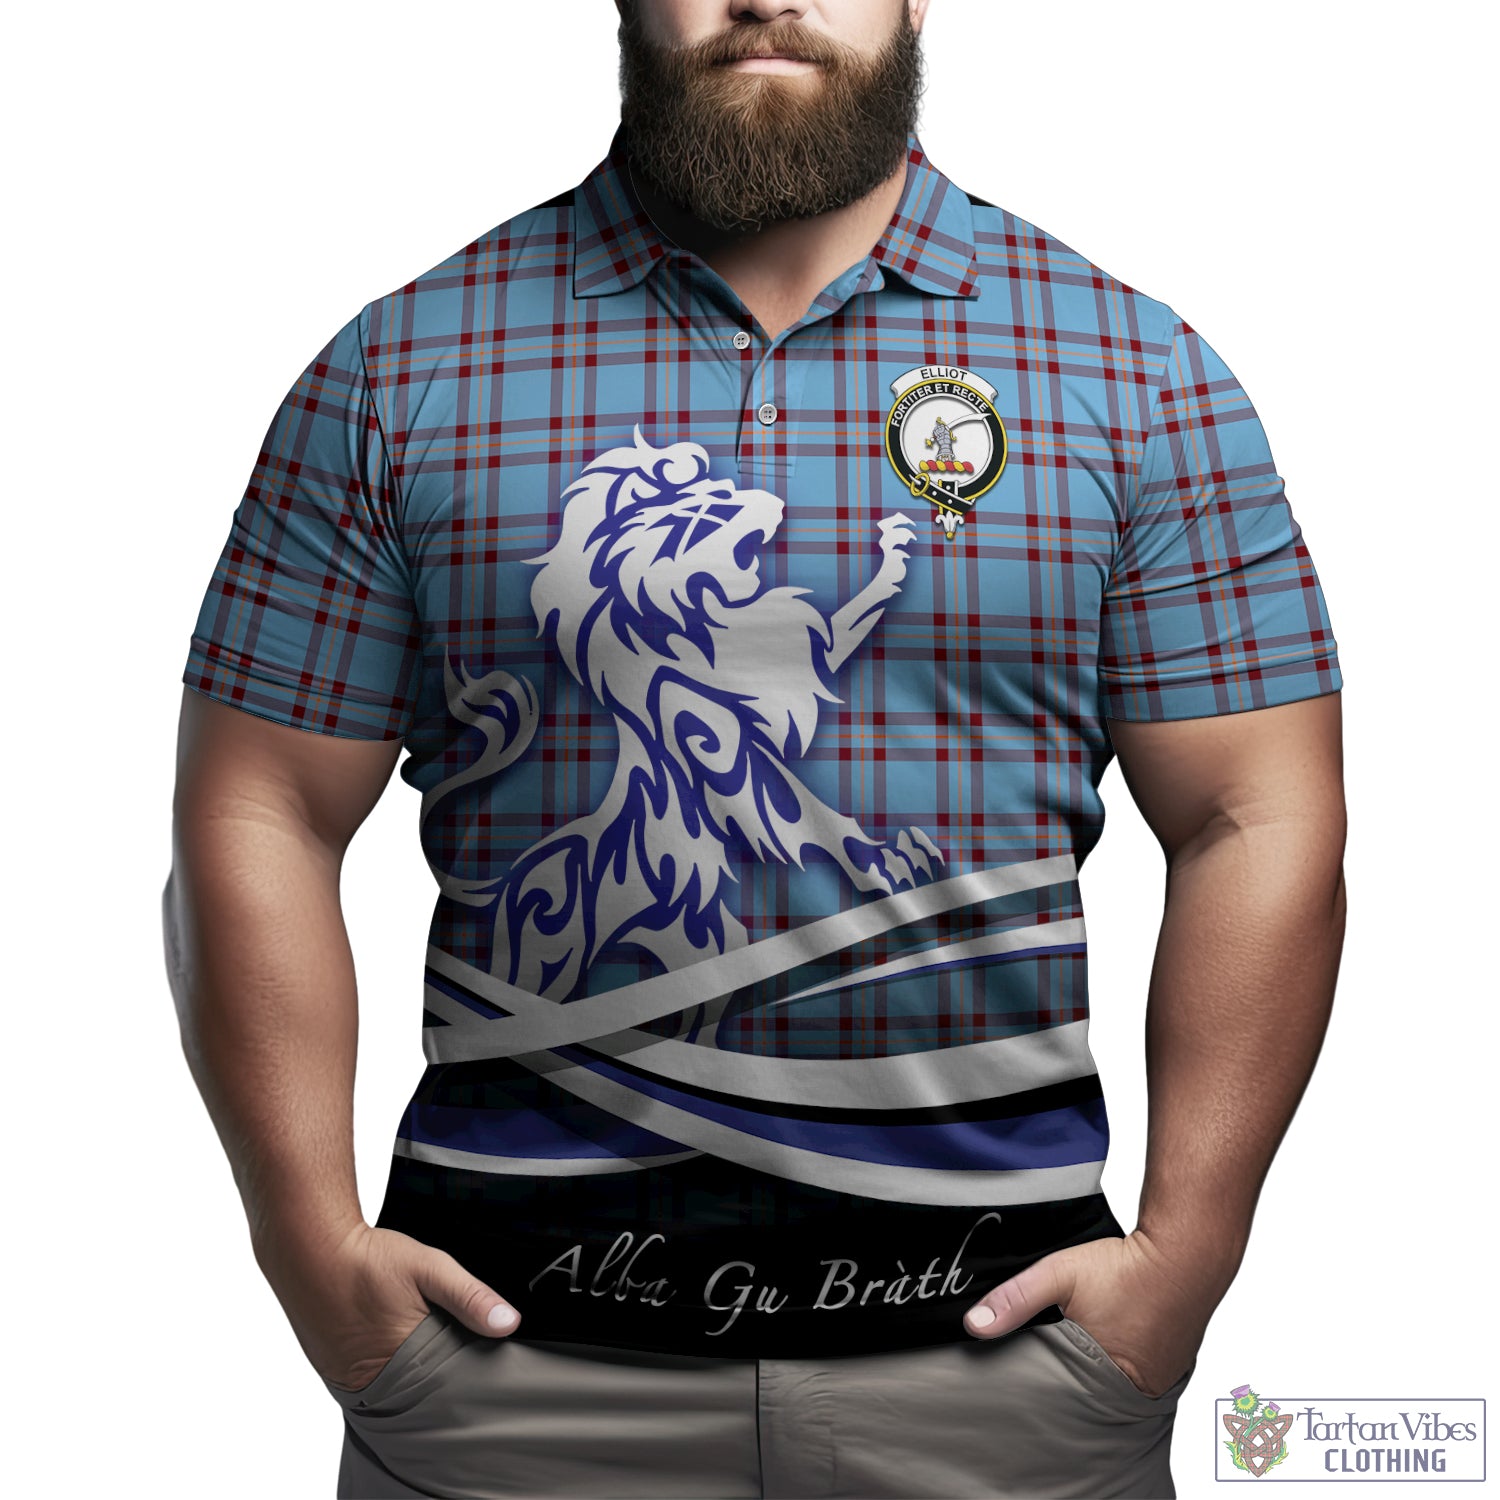 elliot-ancient-tartan-polo-shirt-with-alba-gu-brath-regal-lion-emblem